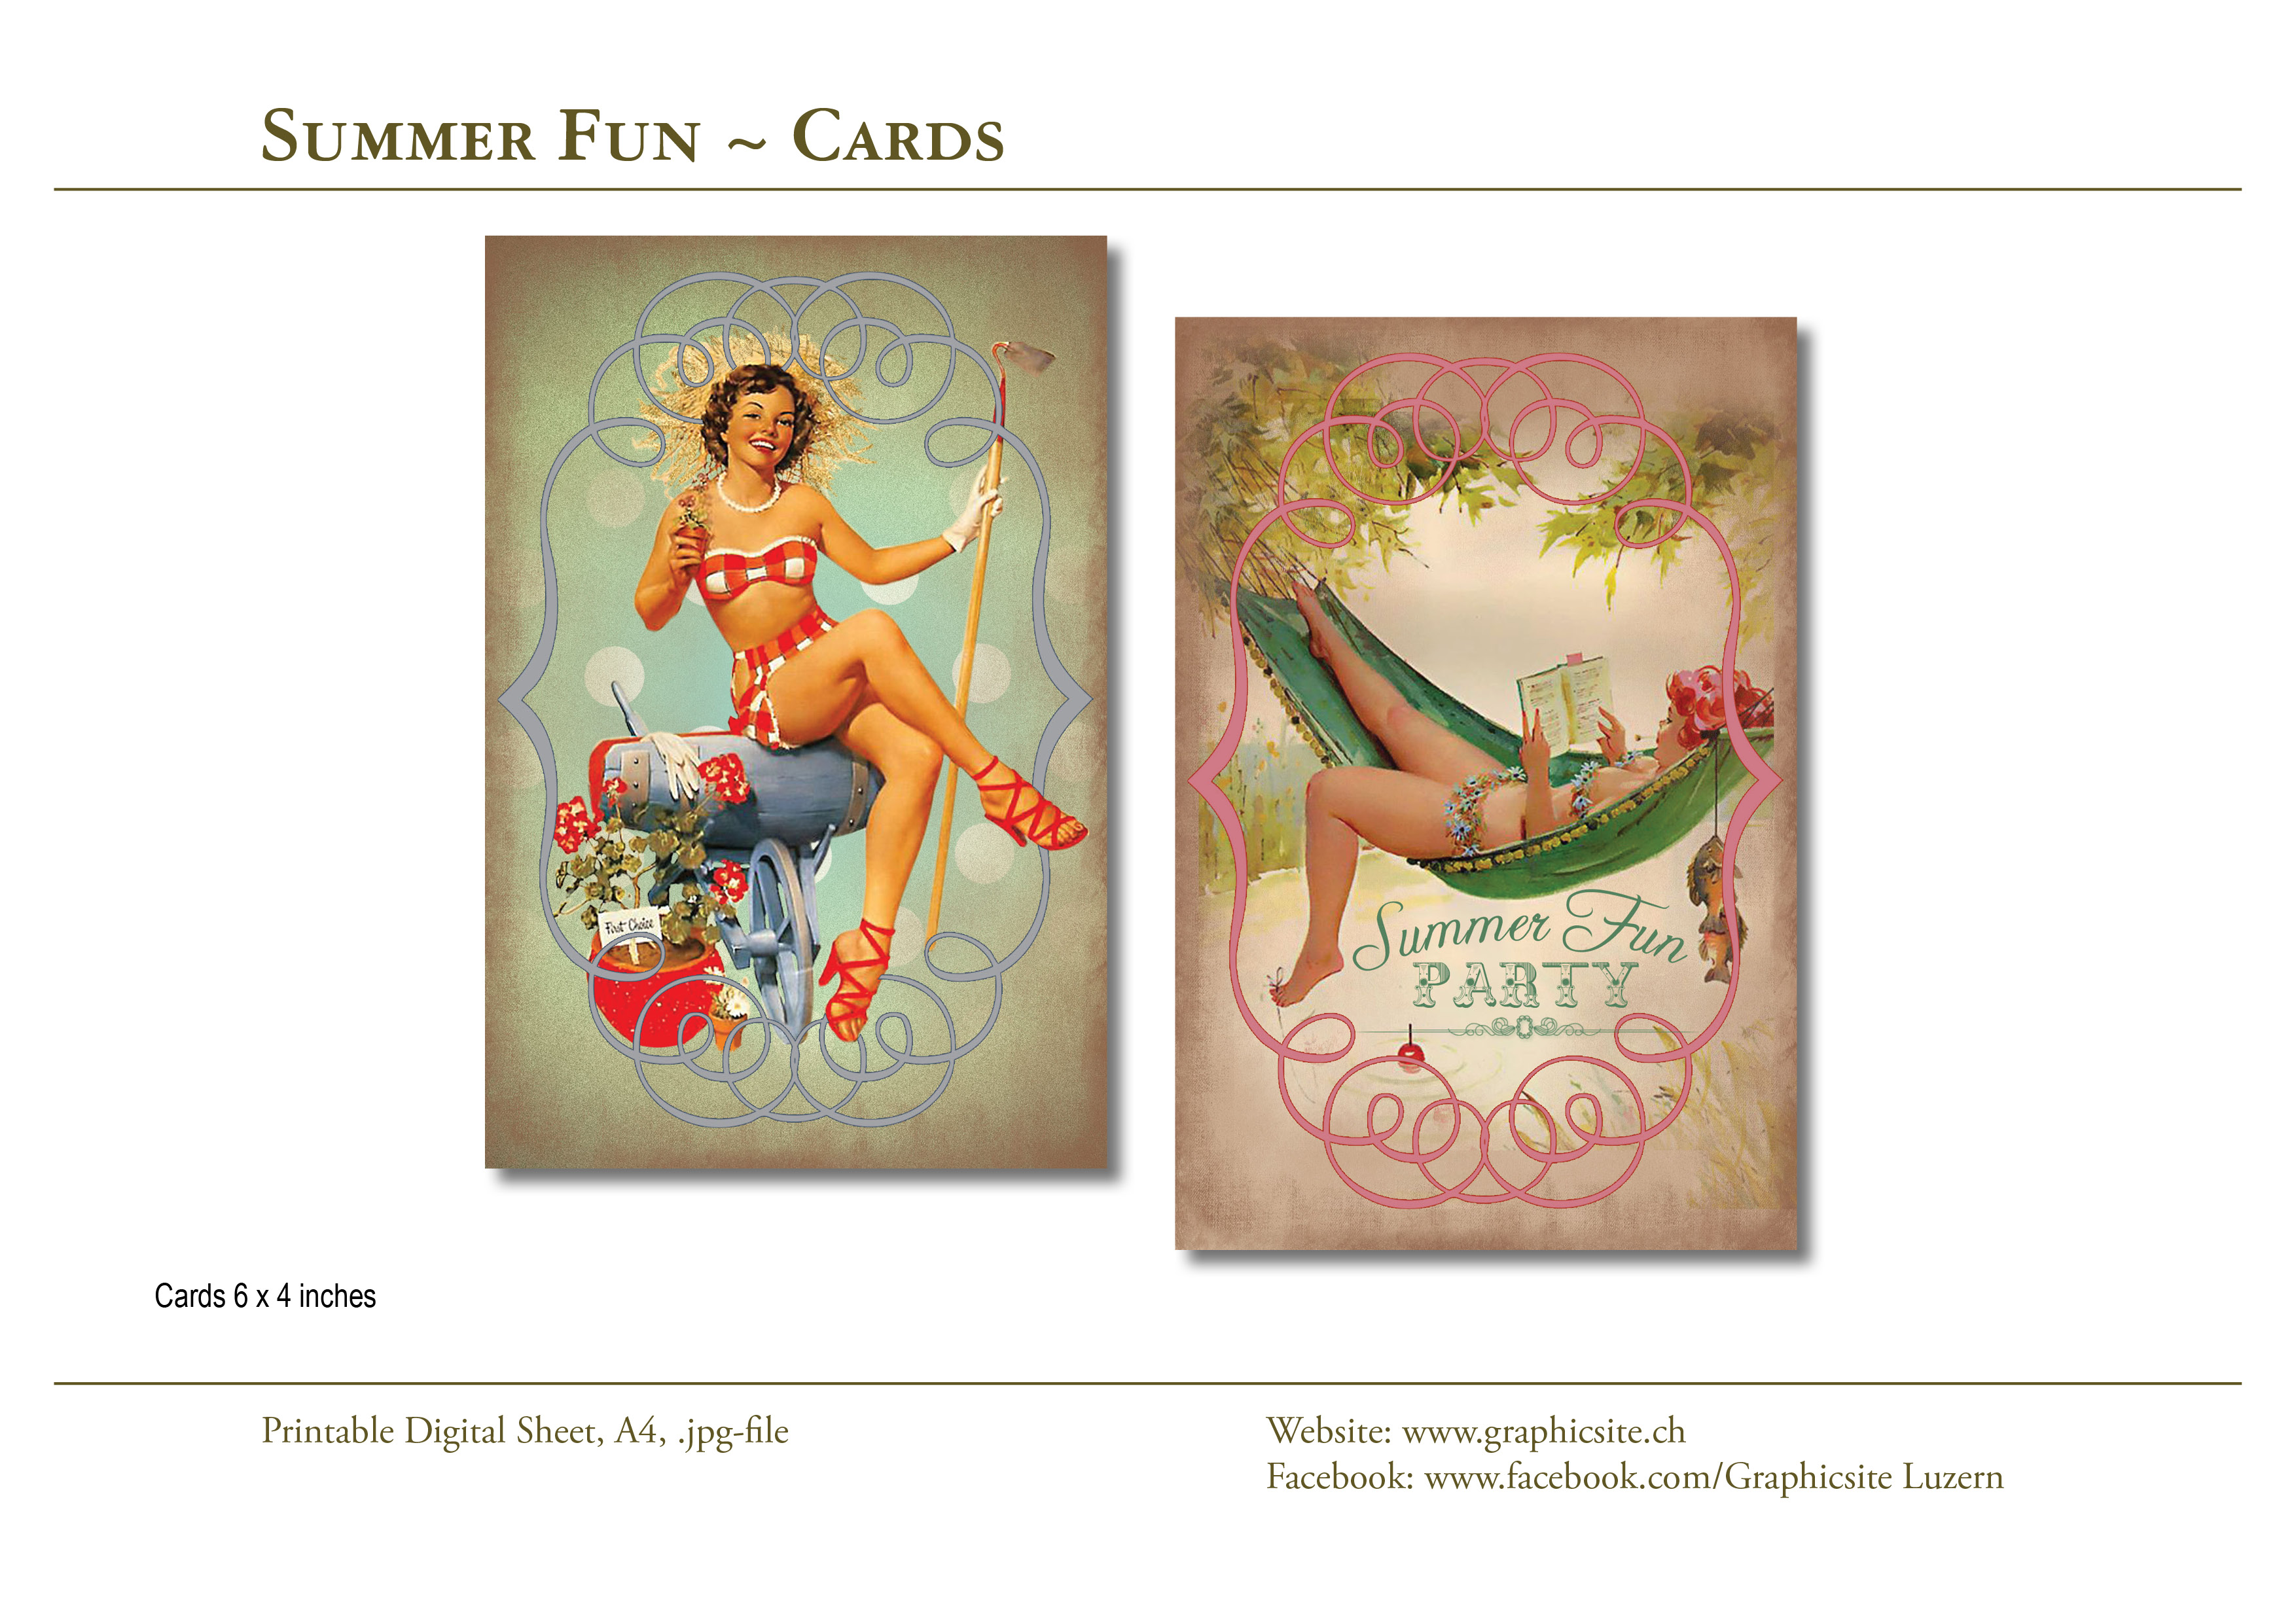 Printable Digital Sheets - 6x4 Images - Retro PinUp SummerFun, #pinup, #summer, #party, #invitation